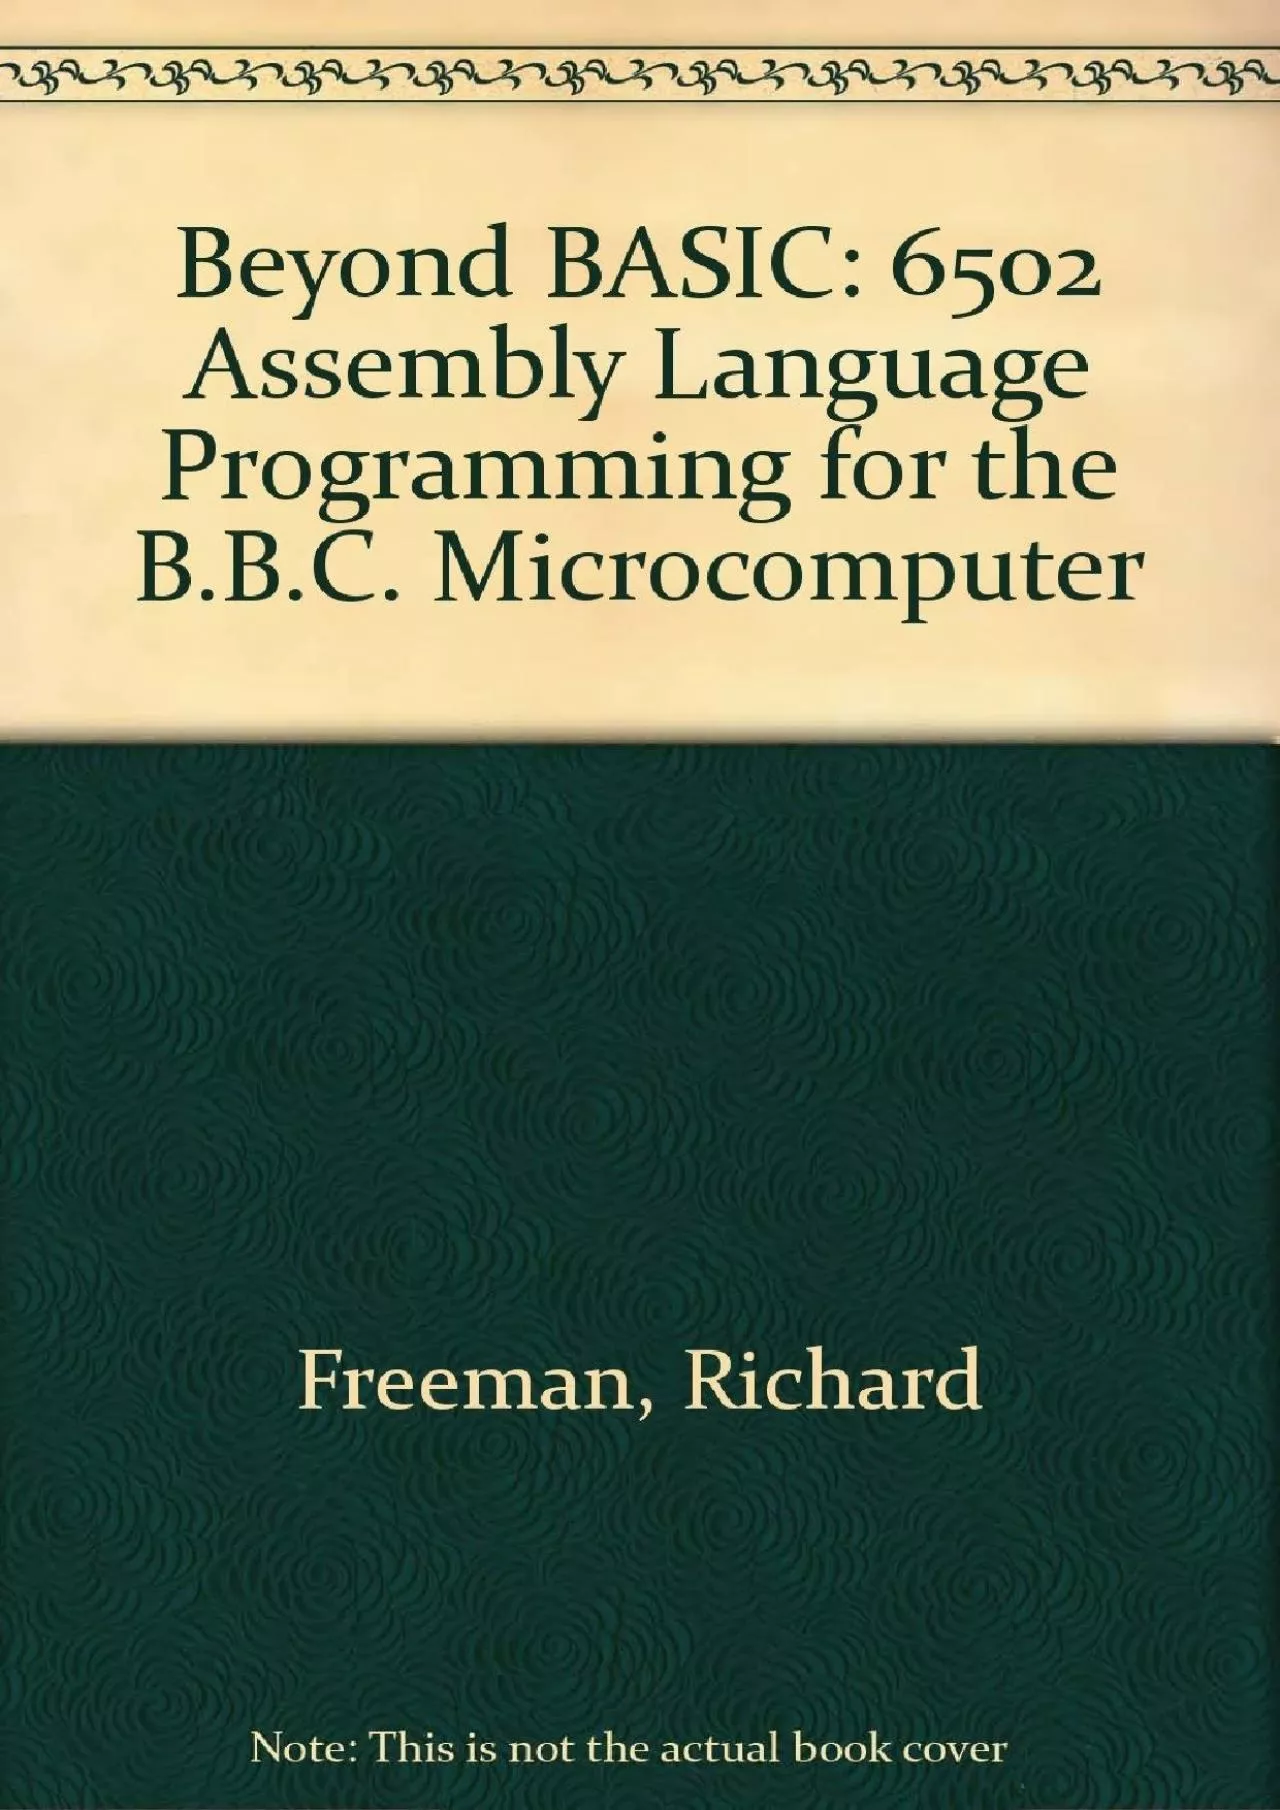 [FREE]-Beyond BASIC: 6502 Assembly Language Programming for the B.B.C. Microcomputer